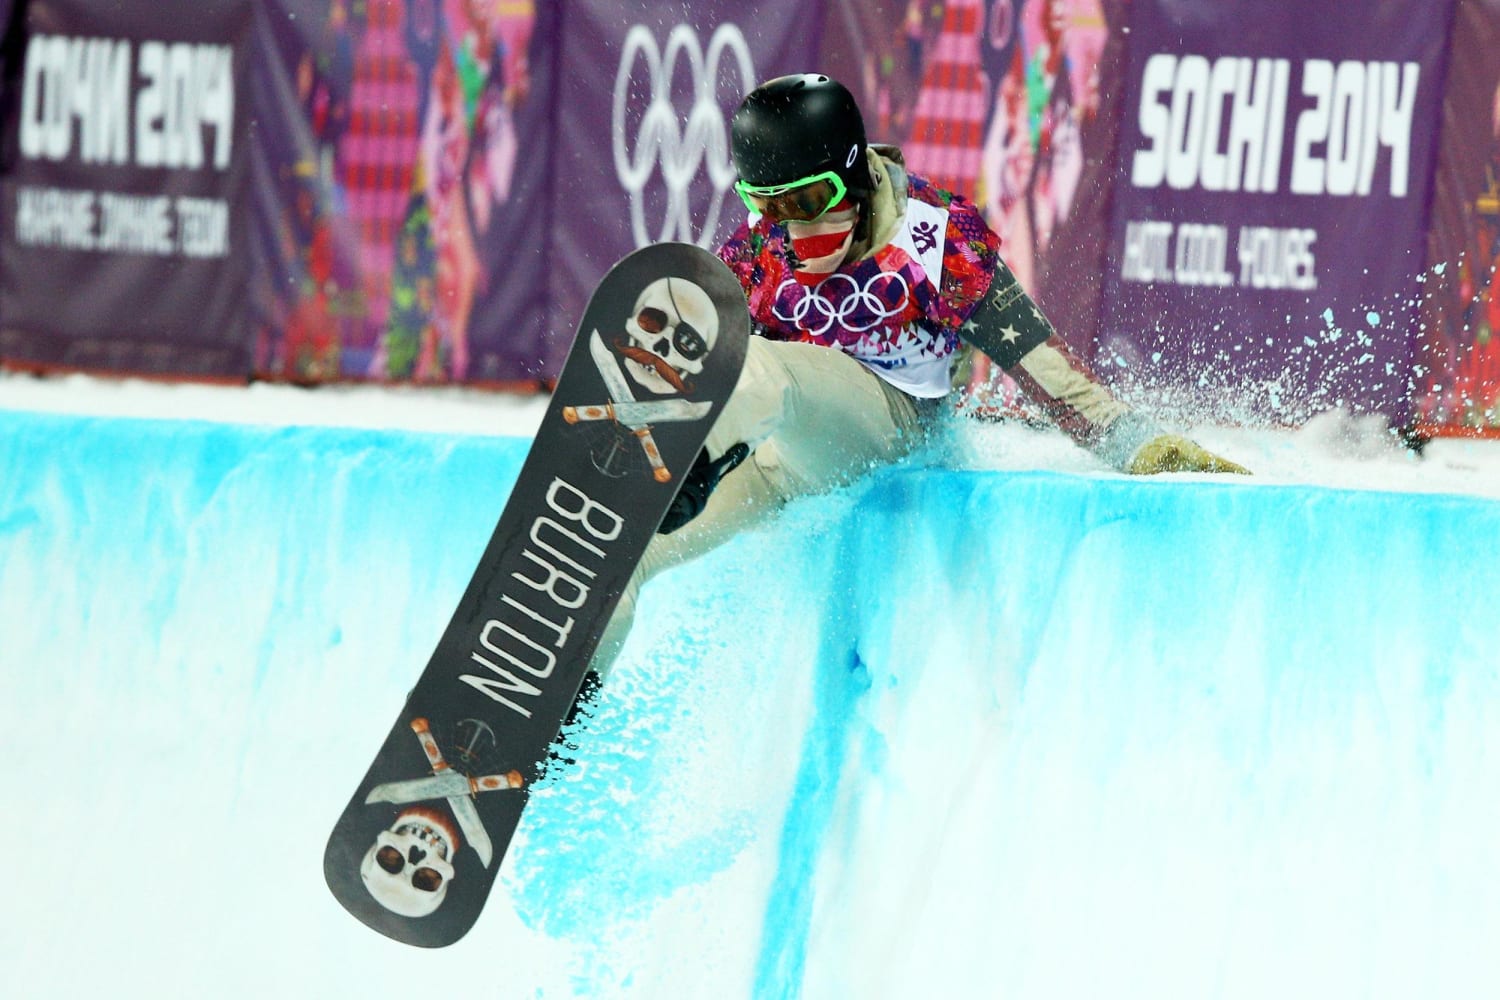 Snowboarding Halfpipe Rules: How Shaun White Can Score Big